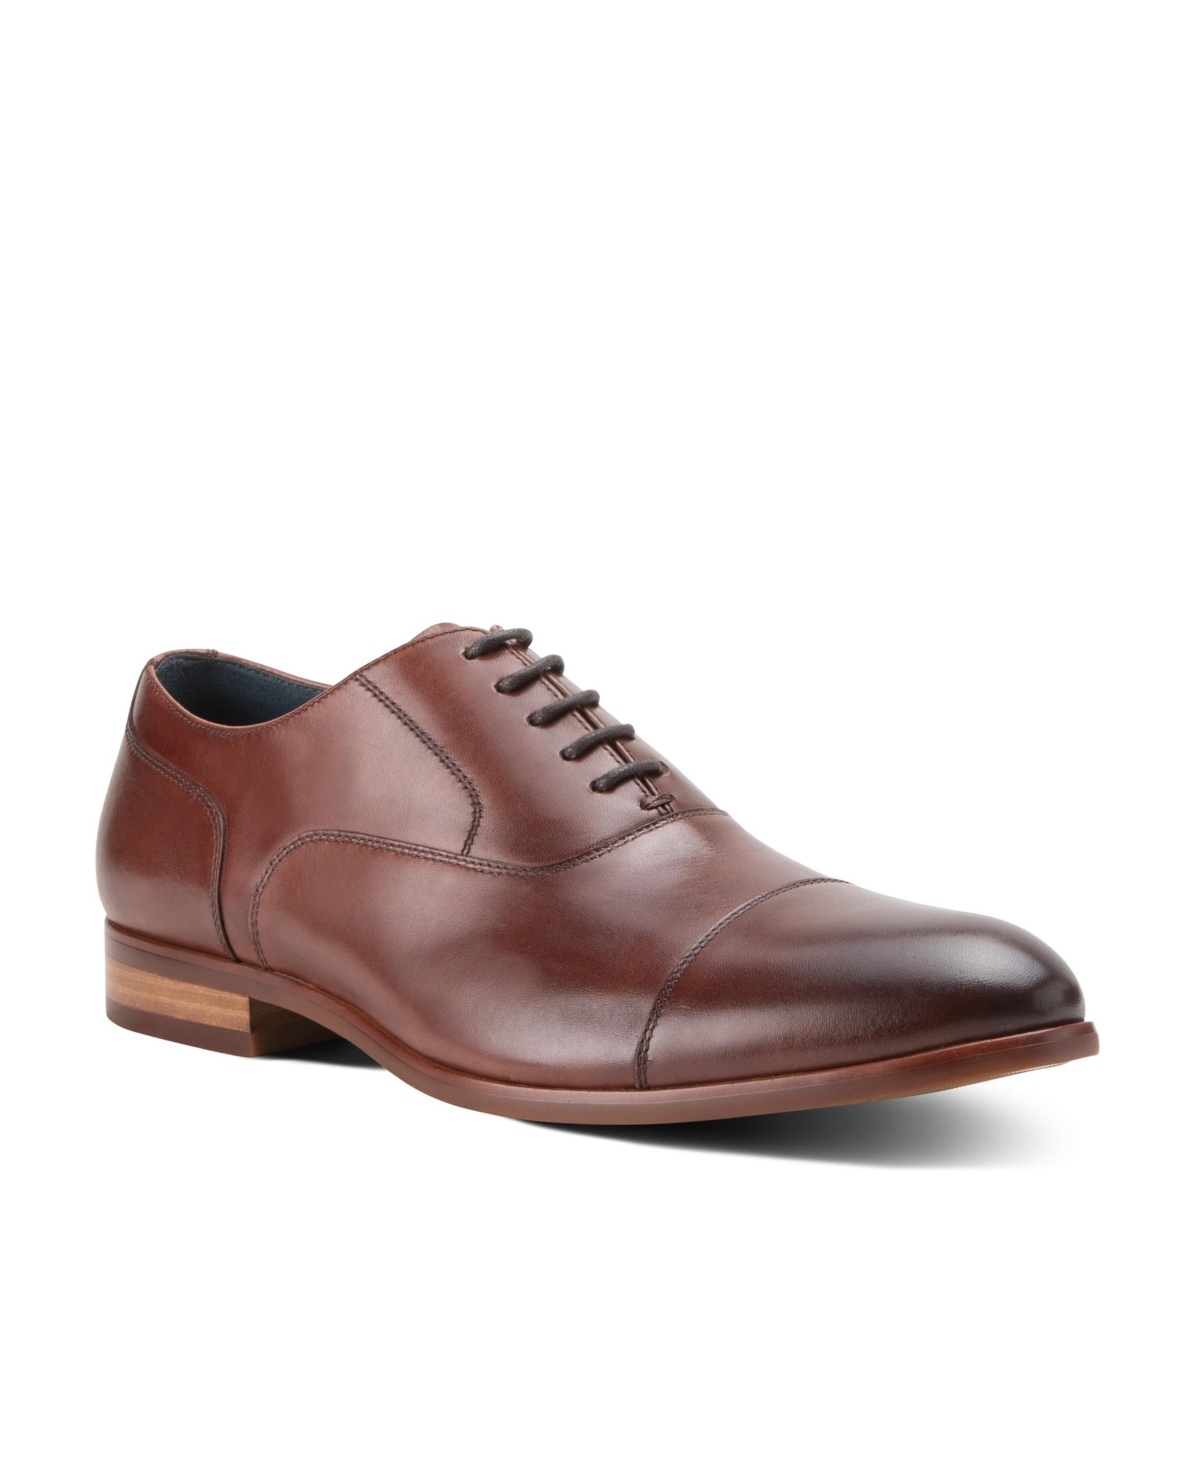 Men's Melvern Dress Lace-Up Cap Toe Oxford Leather Shoes - Chestnut